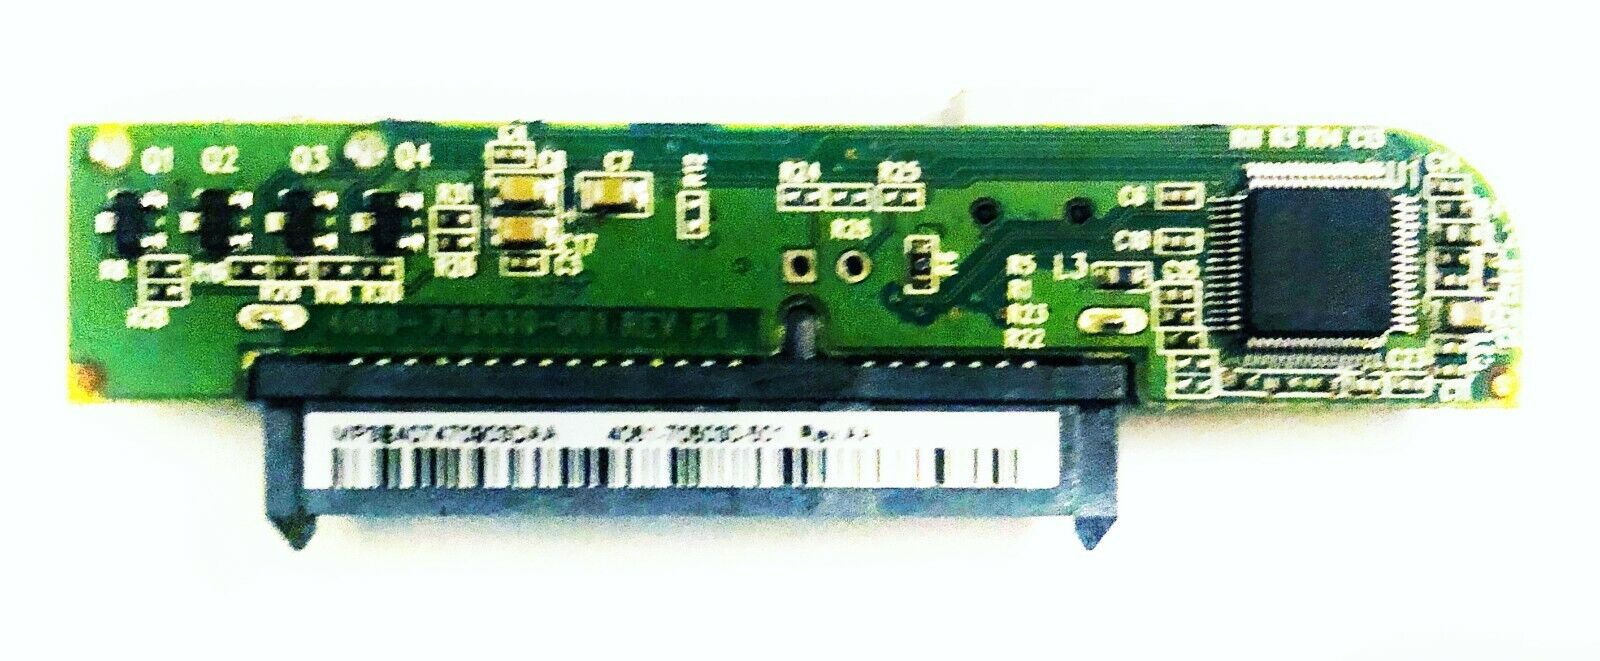 WD PCB Controller Board 4061-705030-501 Rev AA 4060-705030-001 USB 2.0 Q49